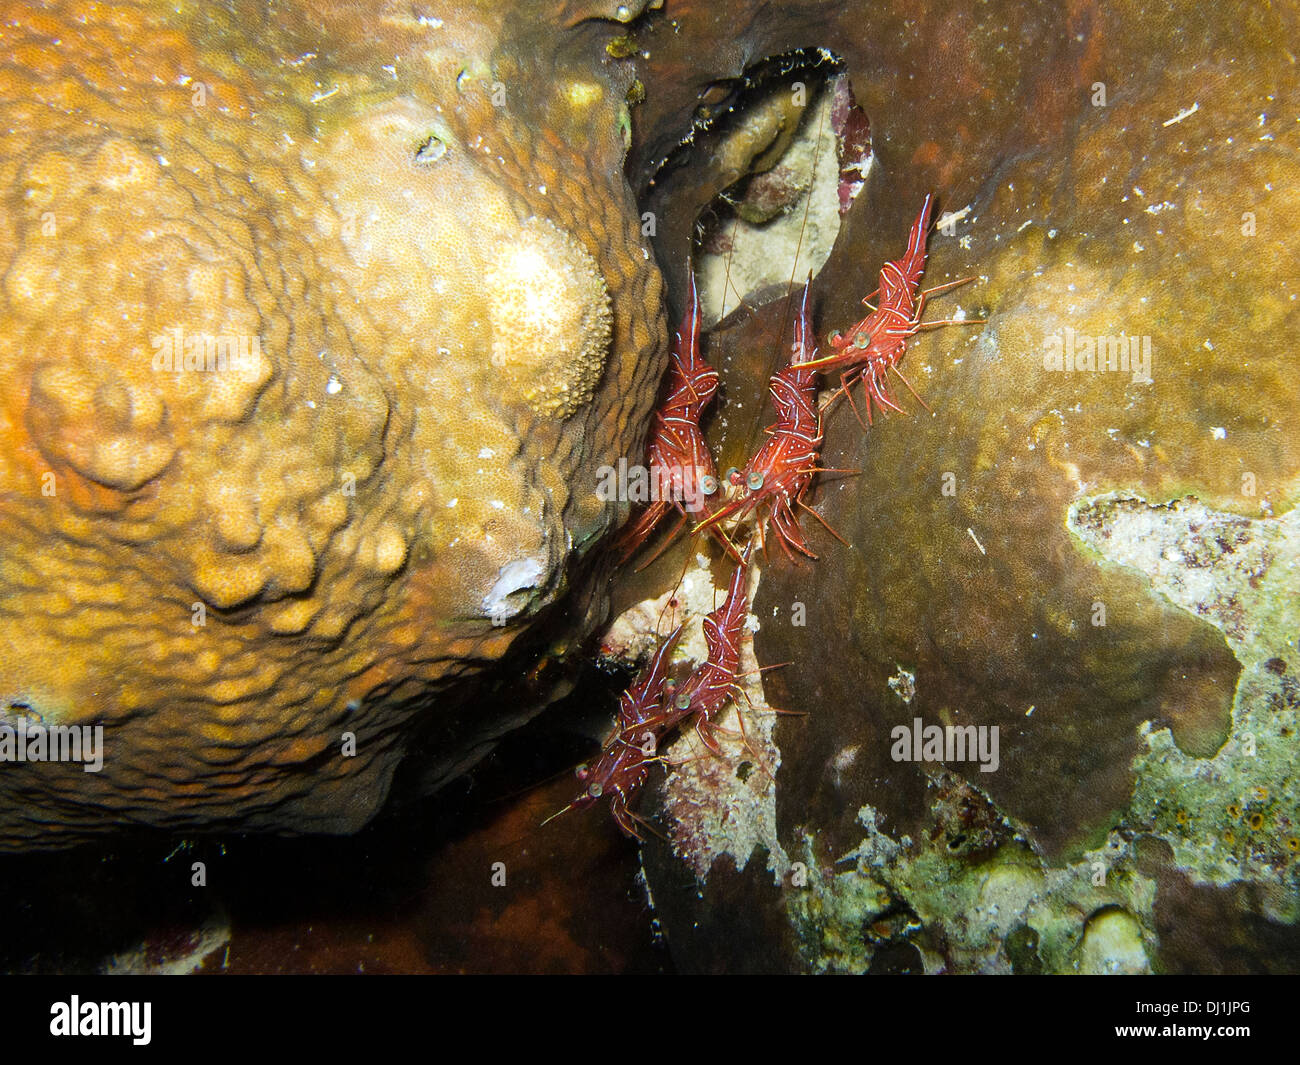 Underwater live in the Red Sea. Pandalus Borealis (Dancing Shrimp) Stock Photo